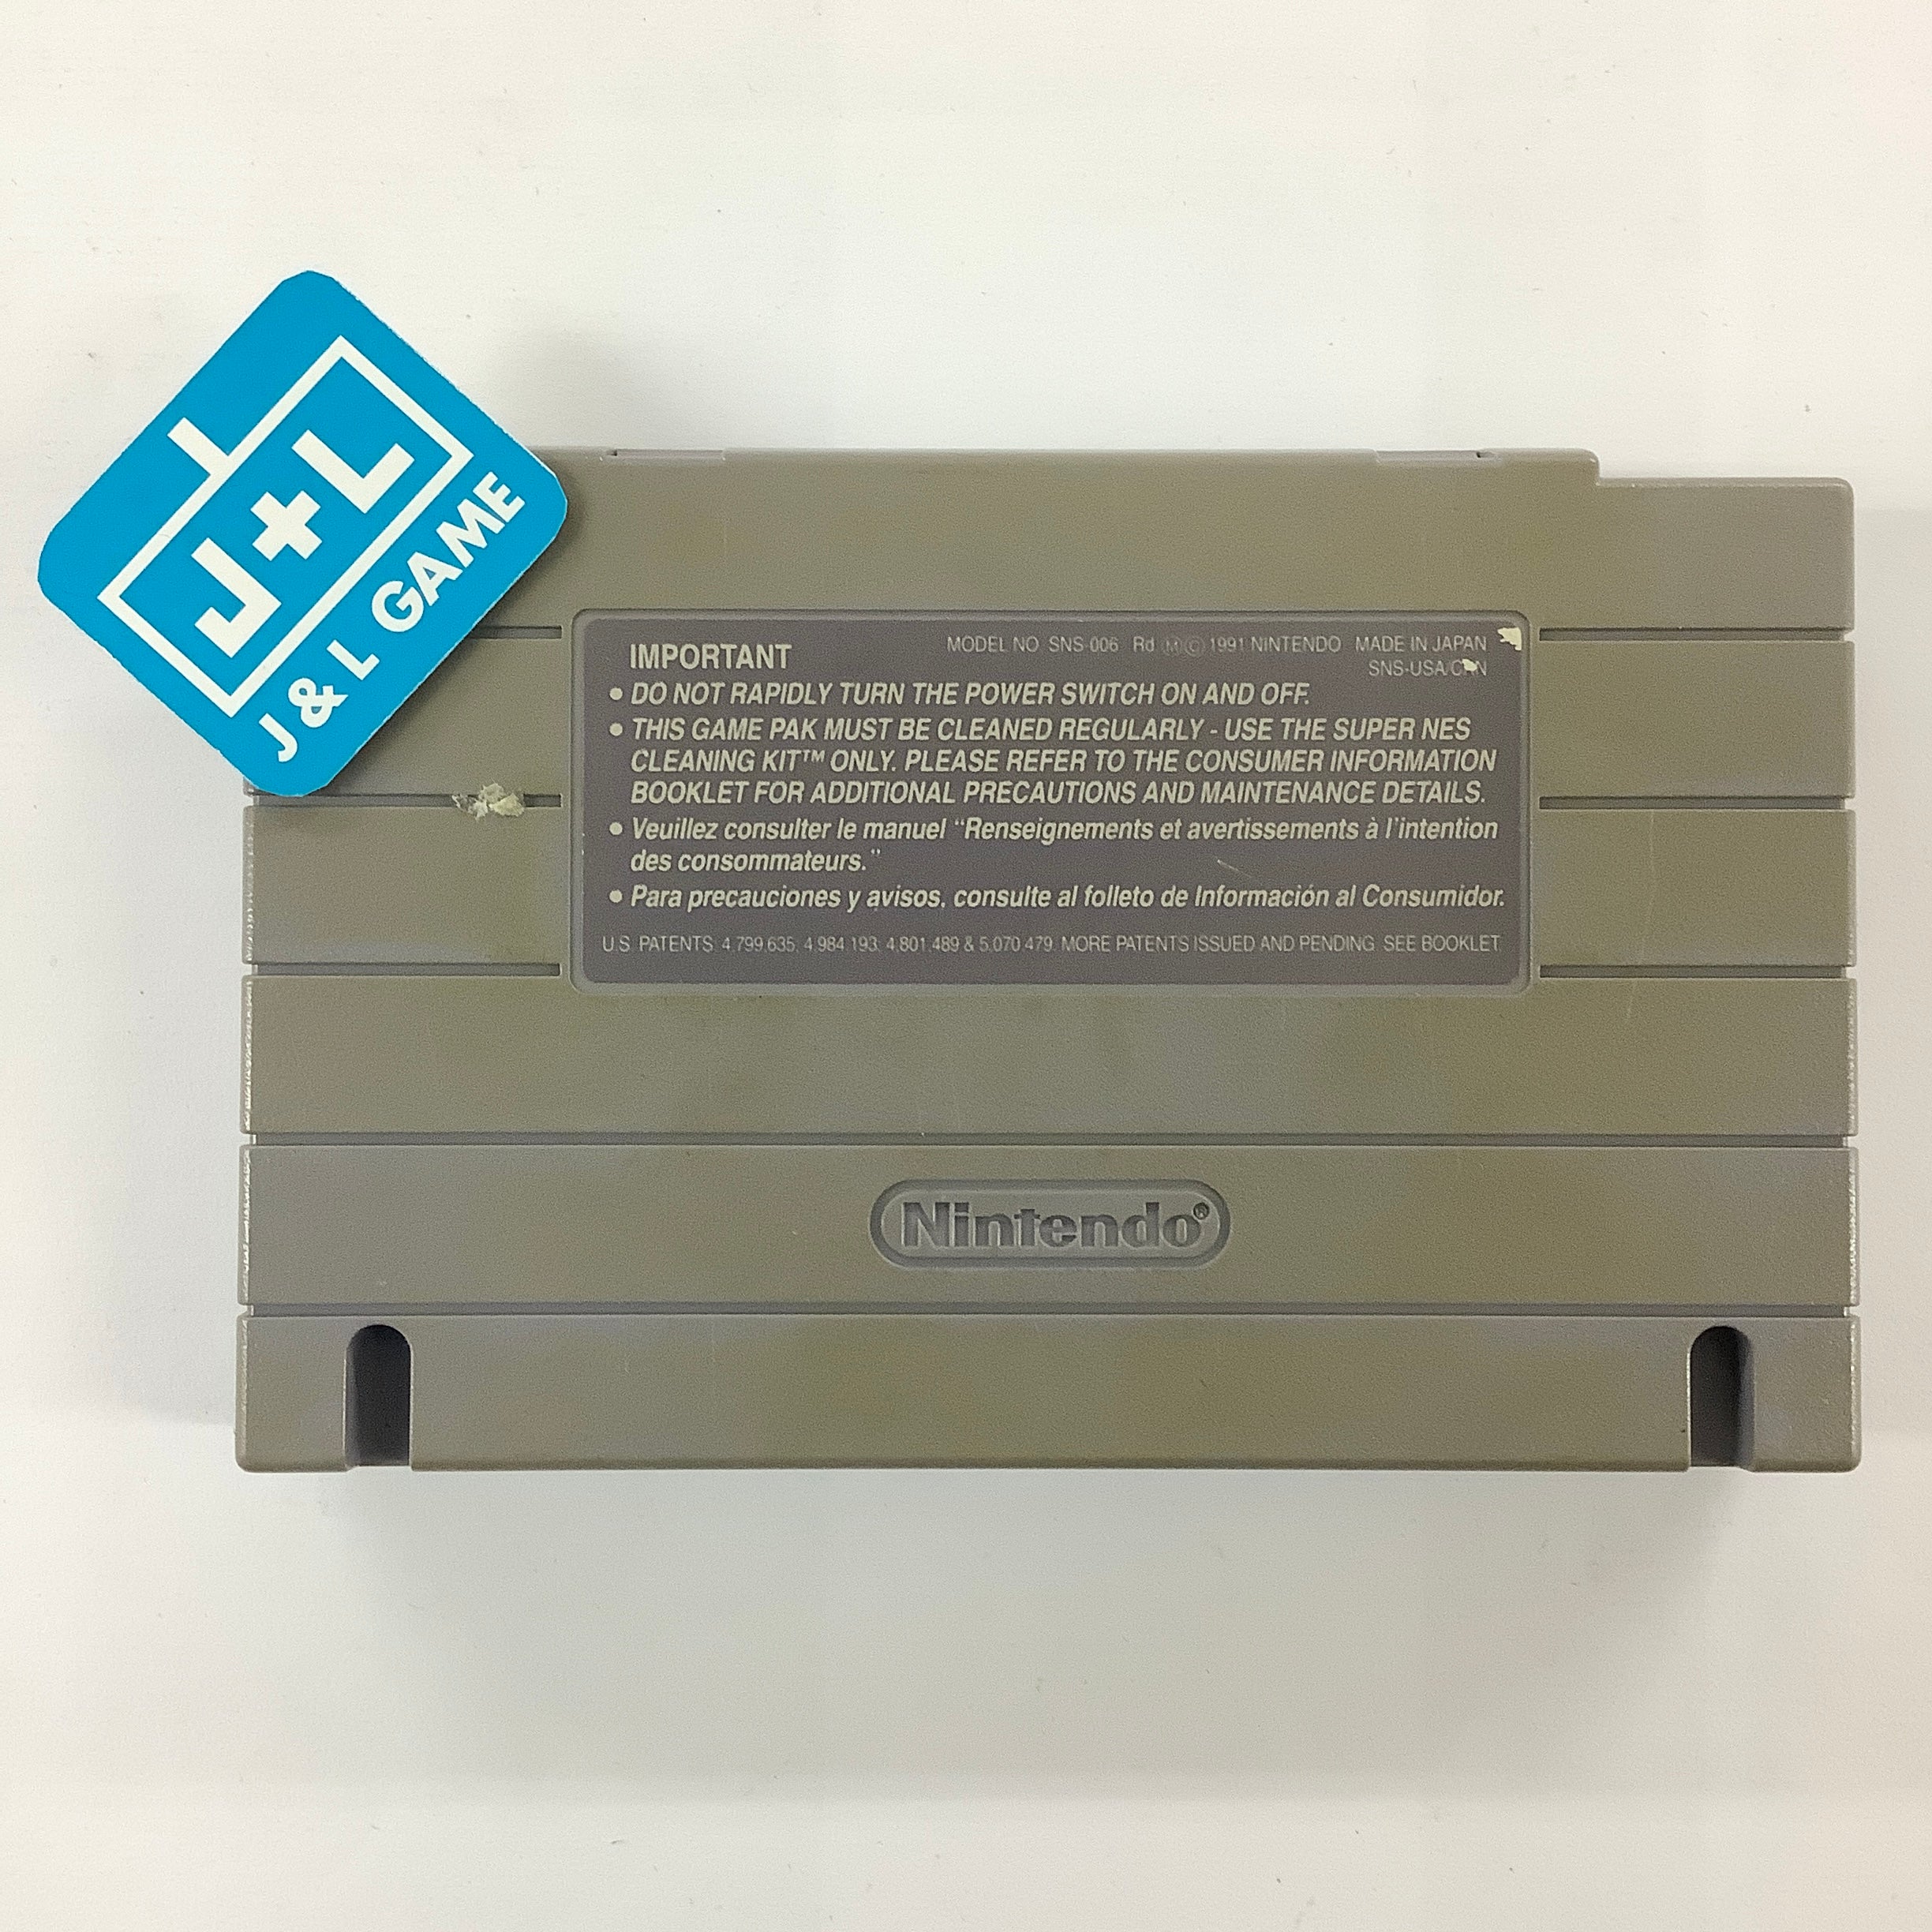 The Duel: Test Drive II - (SNES) Super Nintendo [Pre-Owned] Video Games Ballistic   